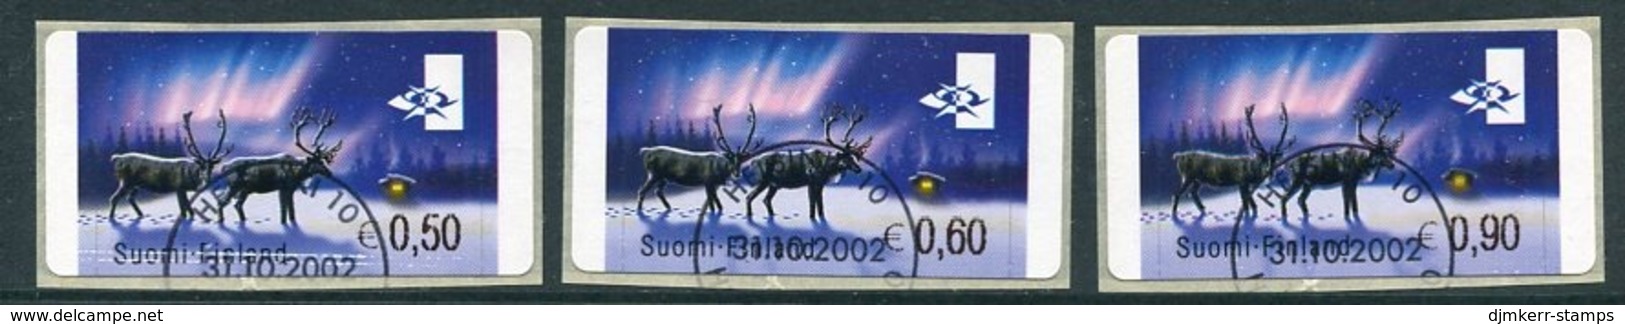 FINLAND 2002 Reindeer ATM, Three Values Used.  Michel 37 - Automaatzegels [ATM]